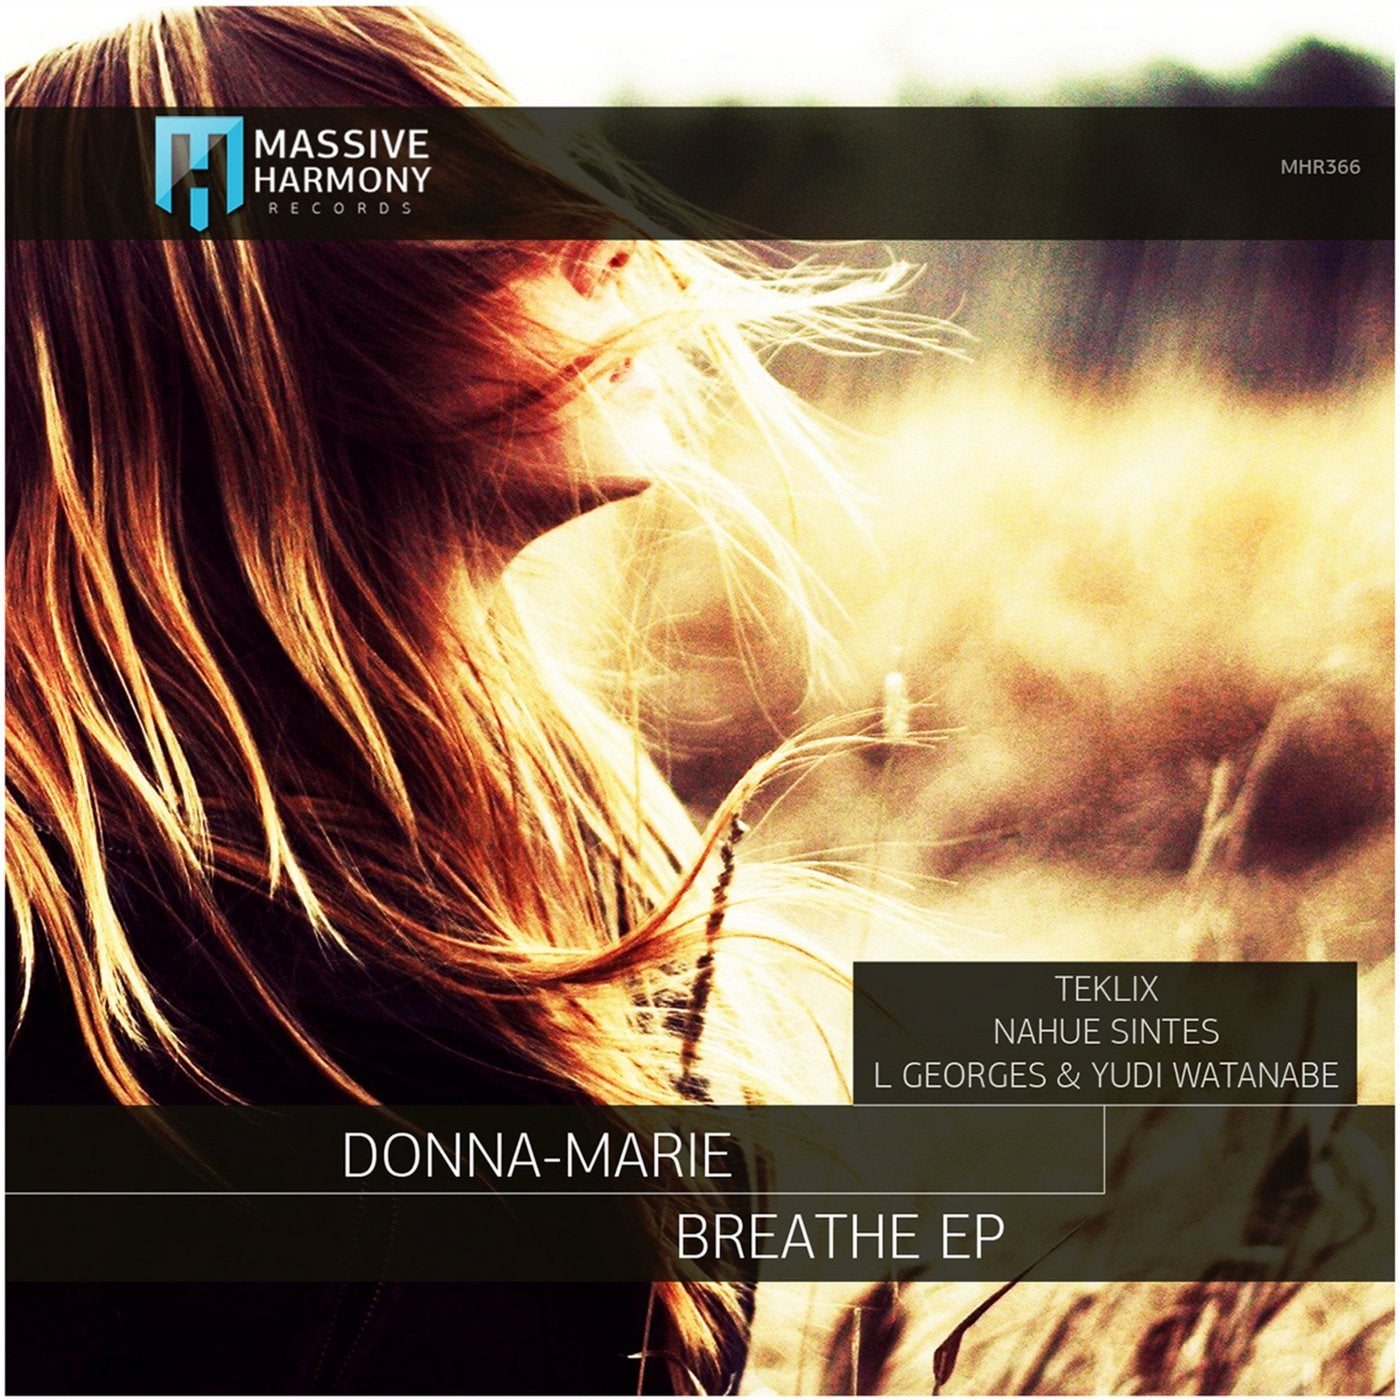 Donna-Marie (nz). Donna-Marie (nz) Invisible. Breathe песня. Donna-Marie (nz) - Eternity. Текст песни breathe